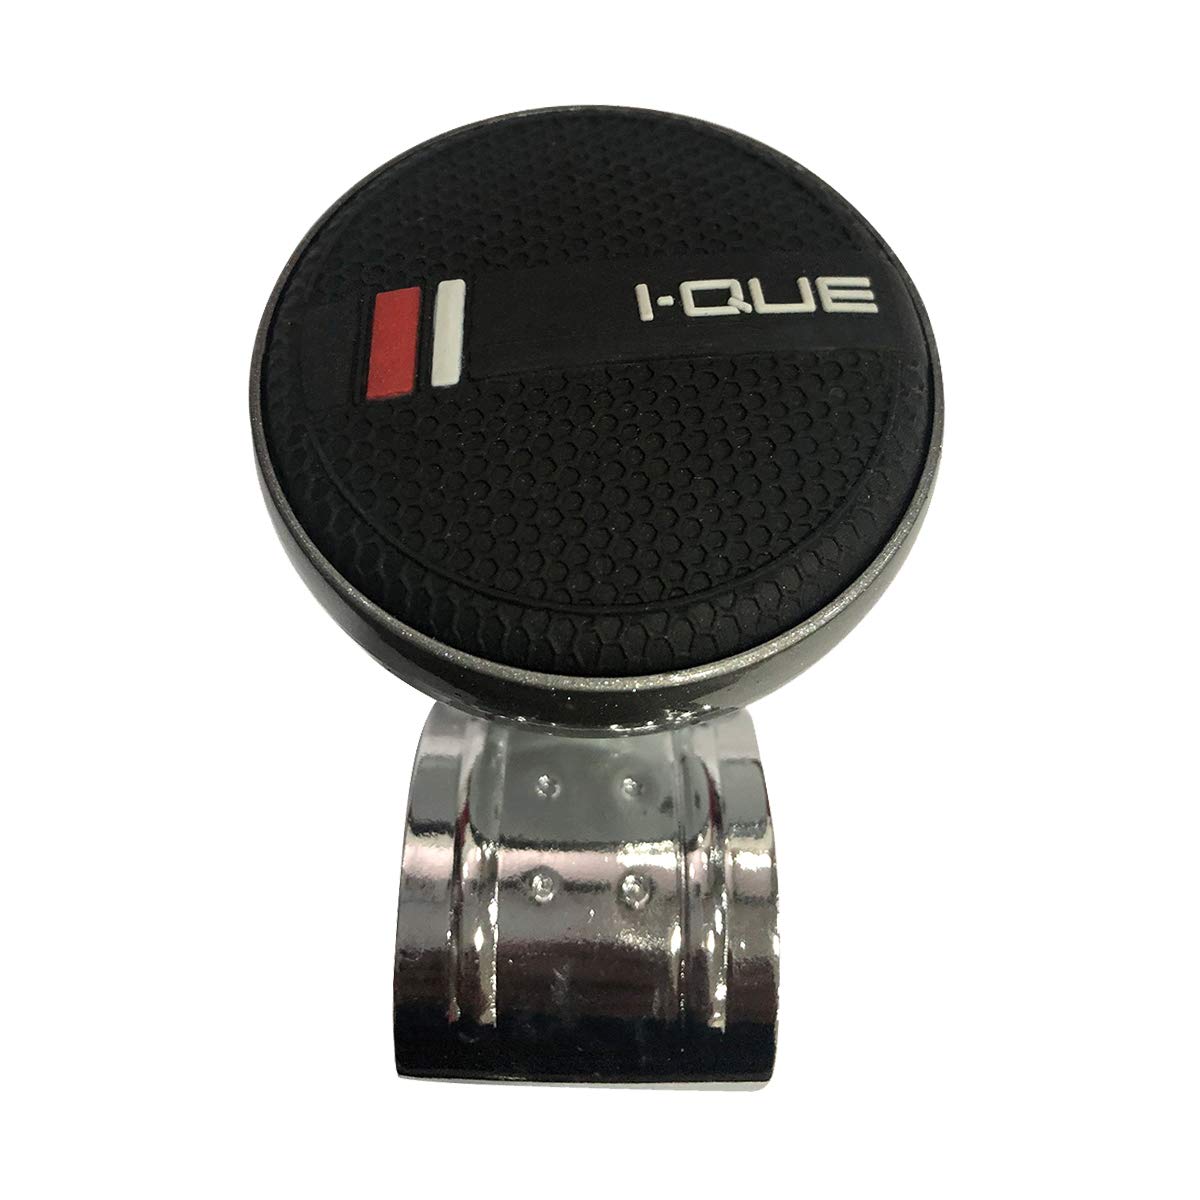 Oshotto I-QUE (IIM) Power Handle (SK-018) Car Steering Spinner Wheel Knob (Black)